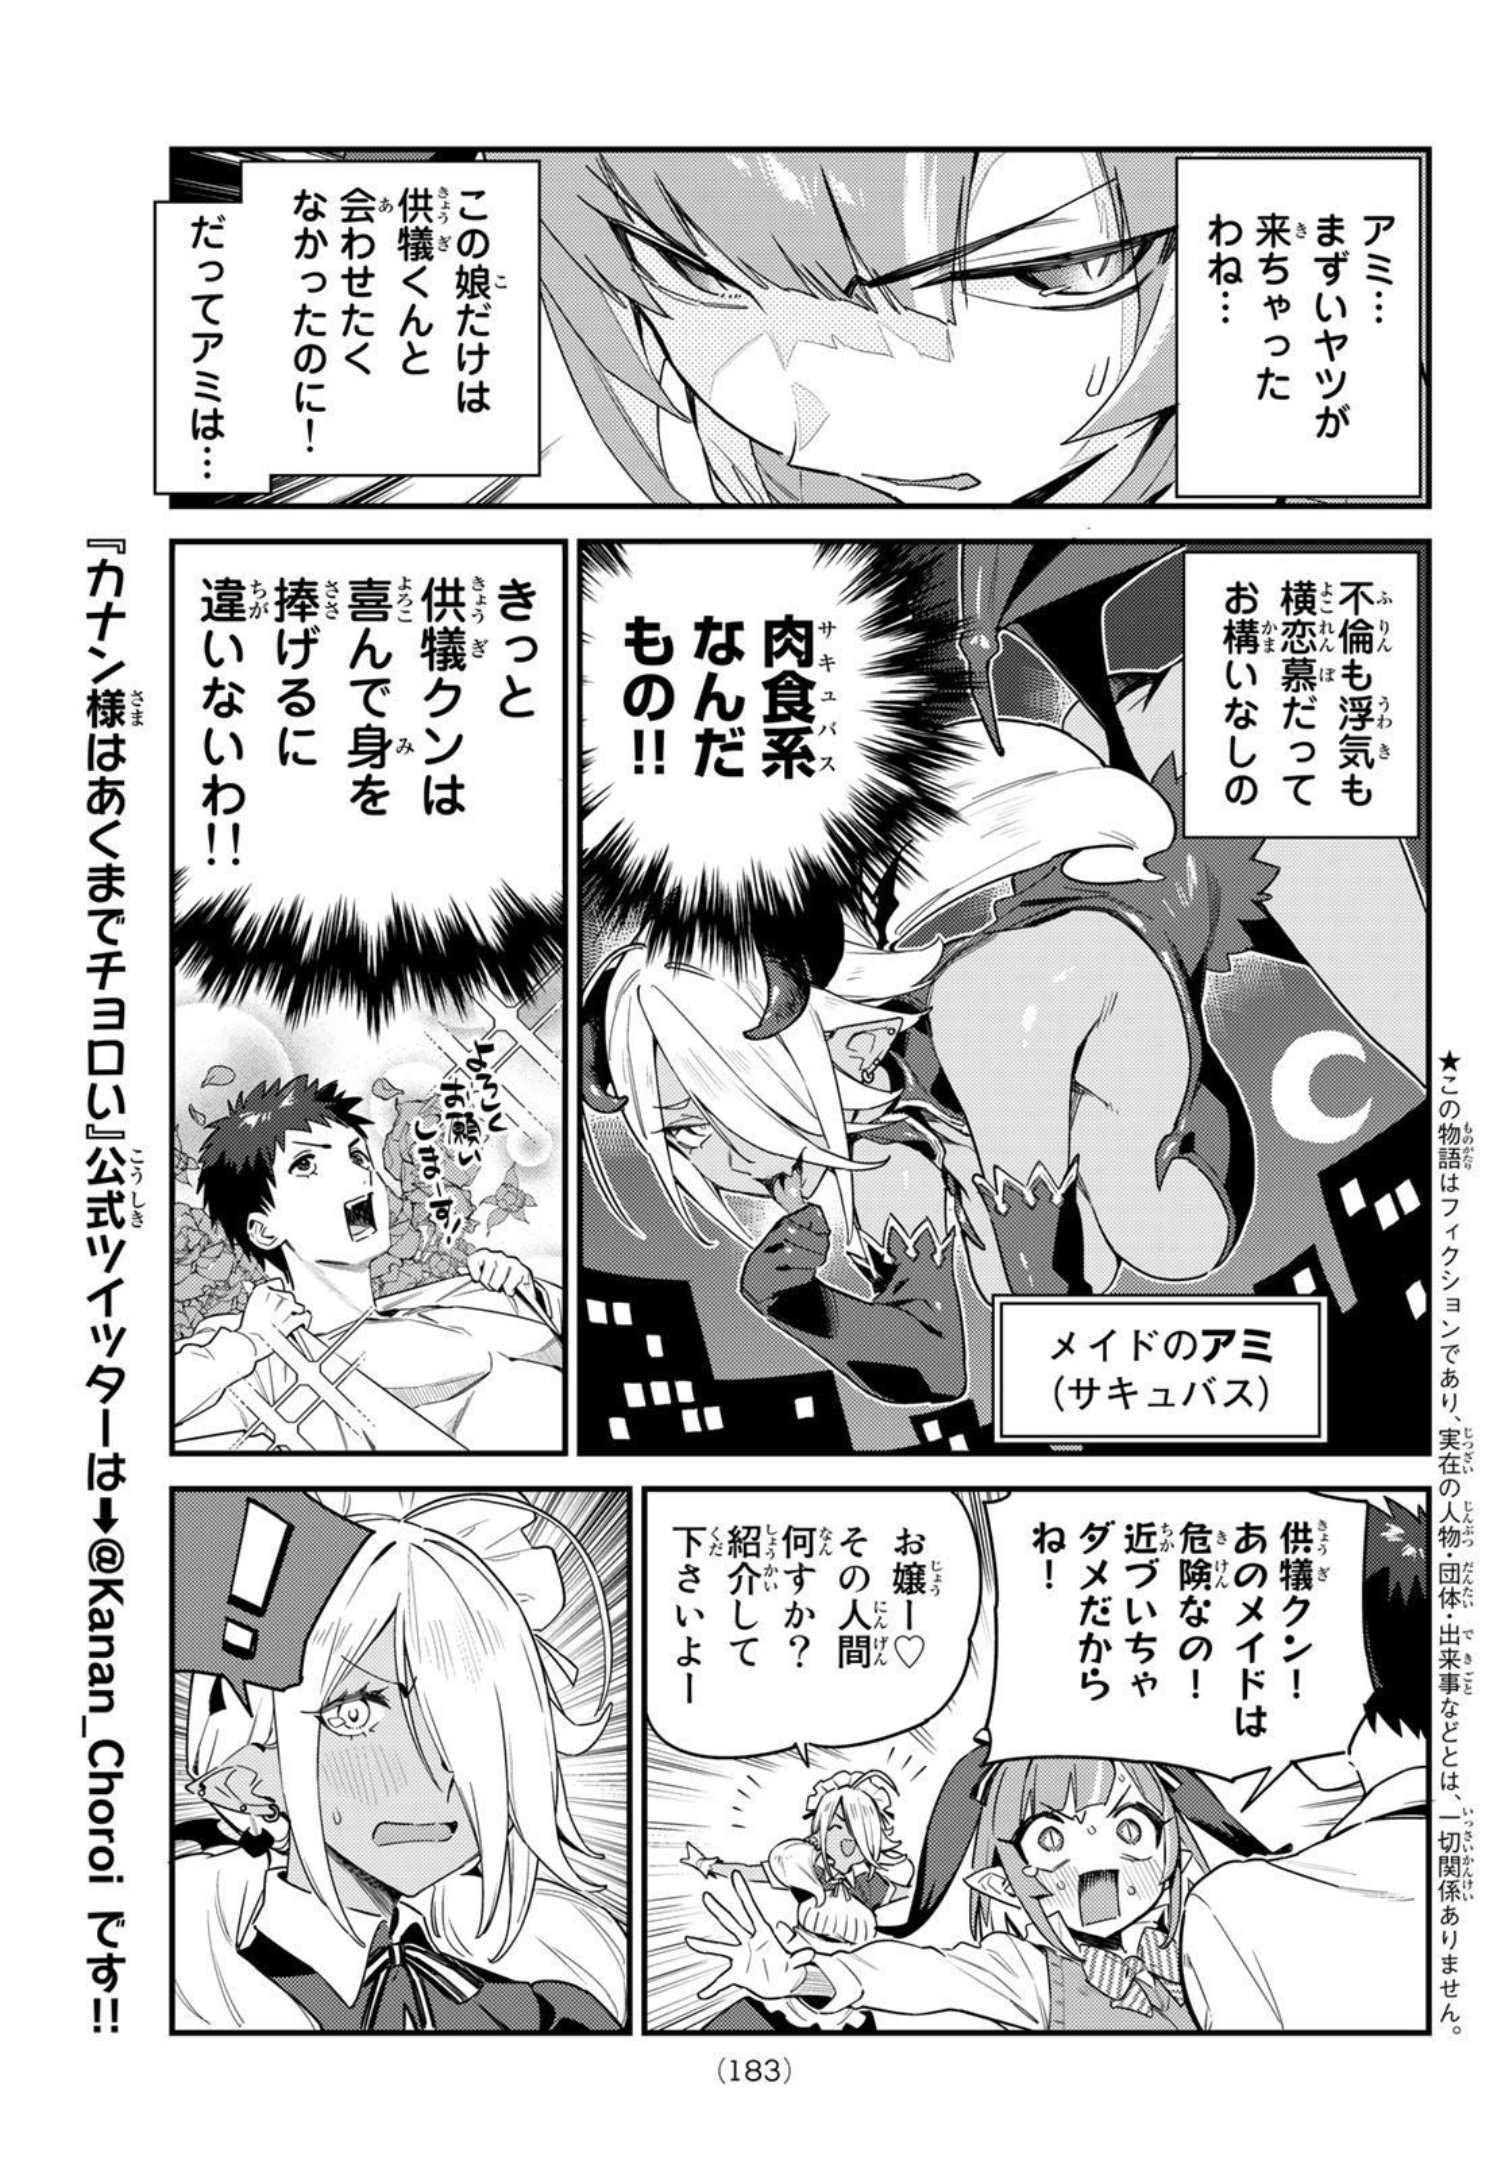 Kanan-sama wa Akumade Choroi - Chapter 008 - Page 3